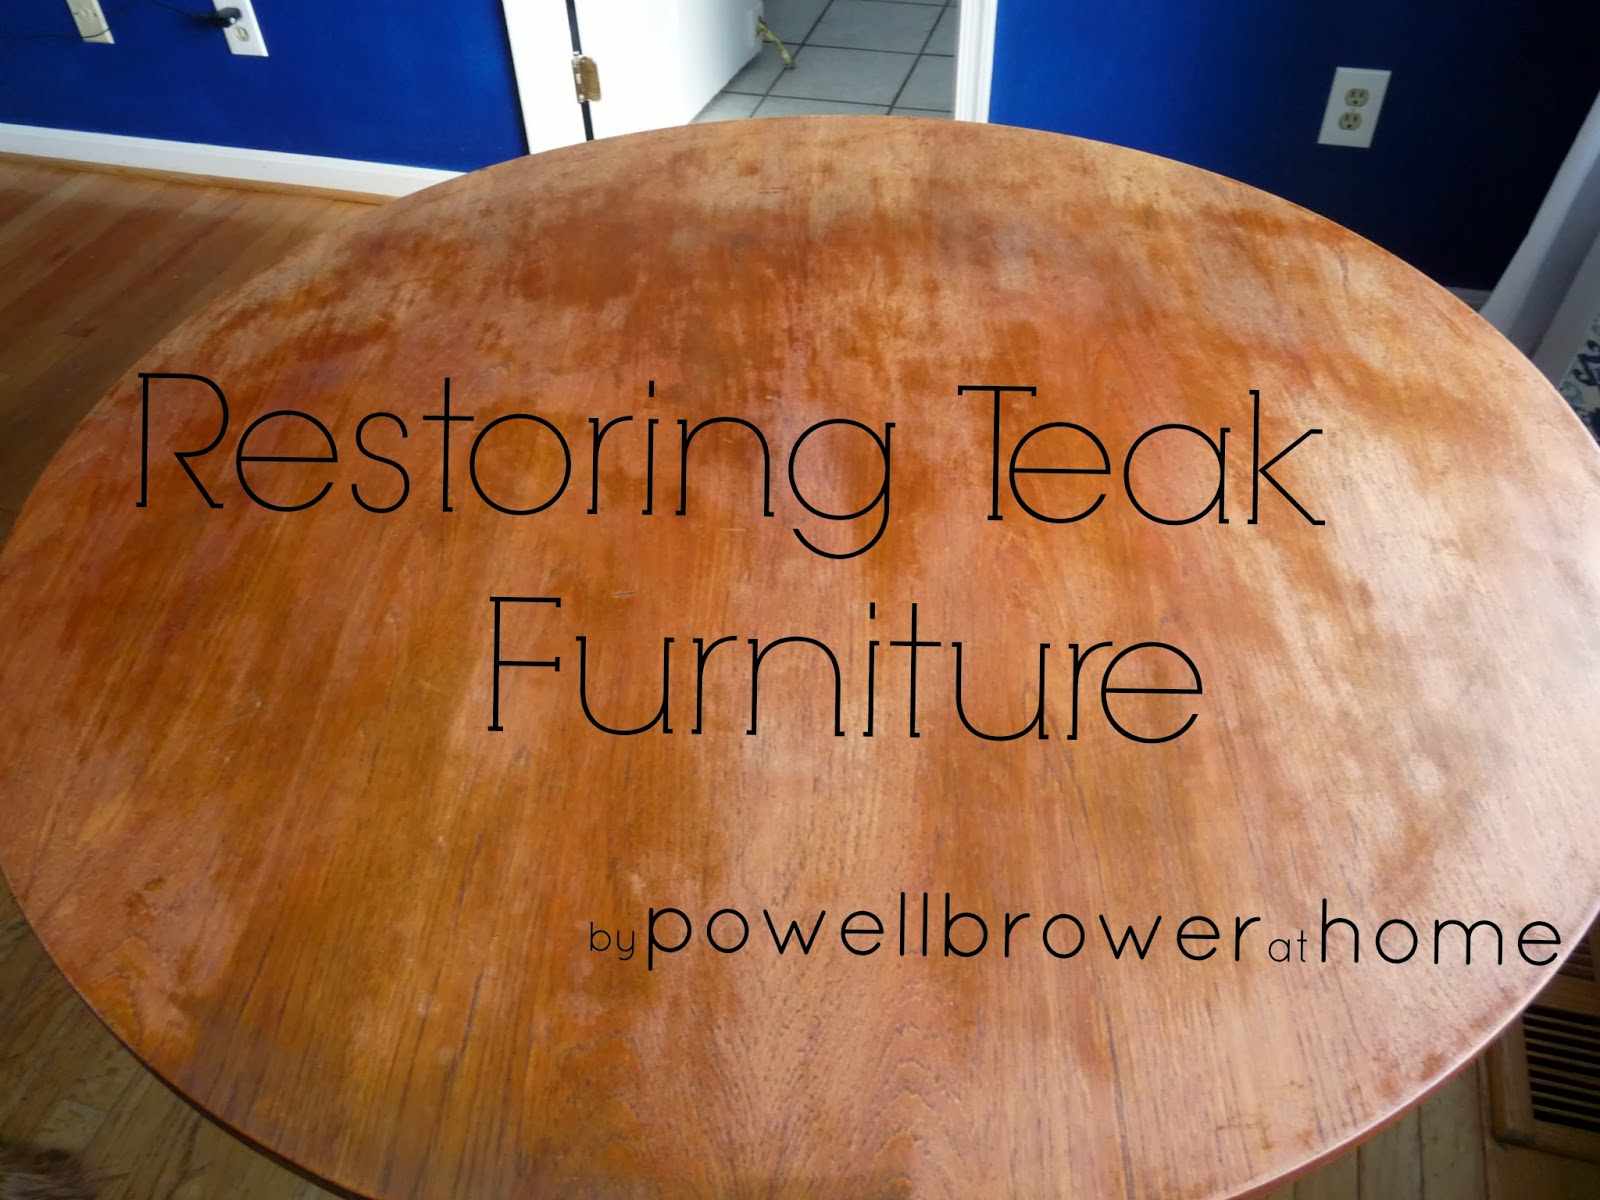 Powell Brower At Home Restoring Teak Furniture